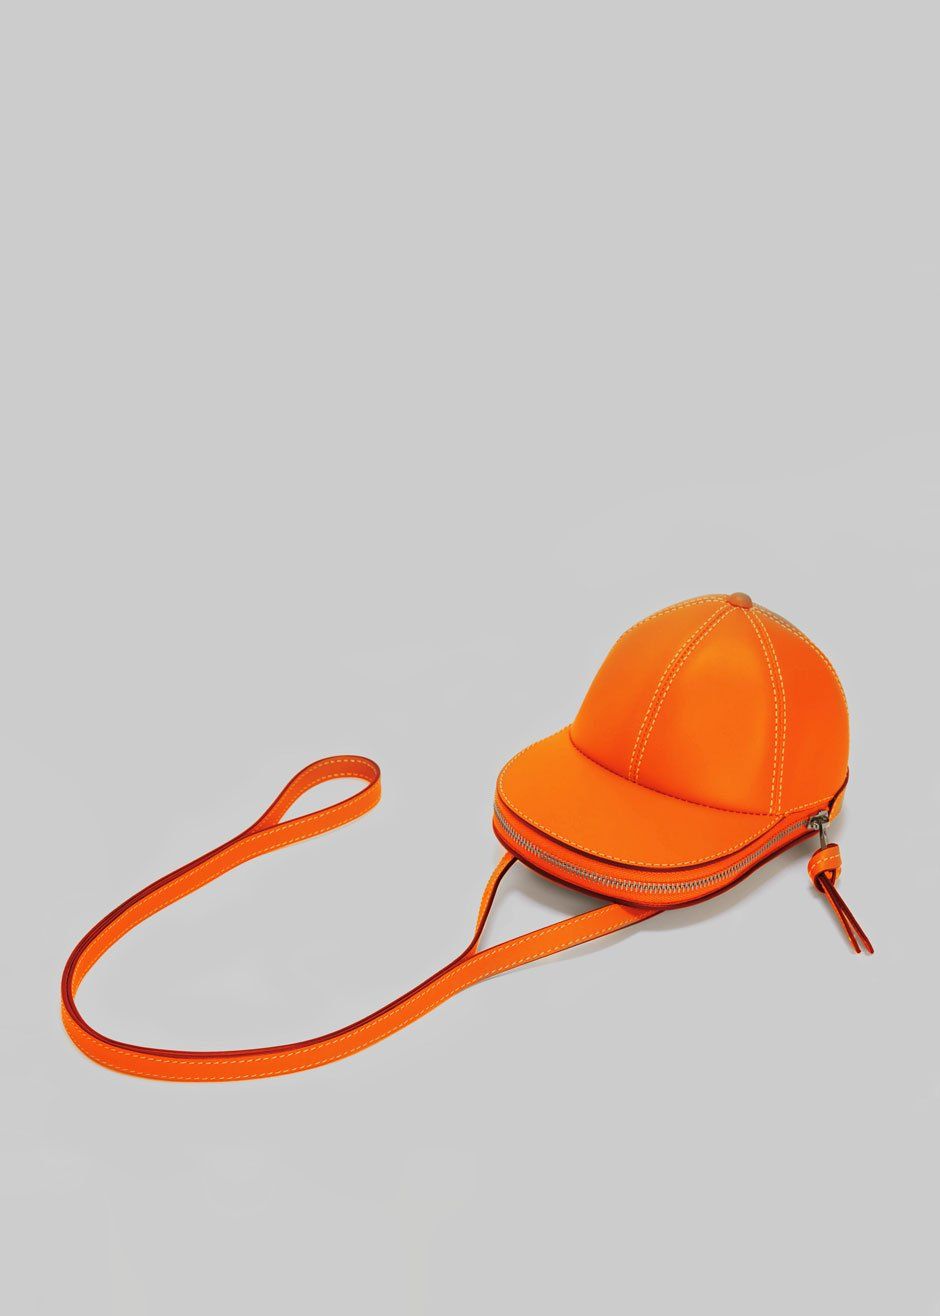 JW Anderson Nano Cap Bag - Neon Orange